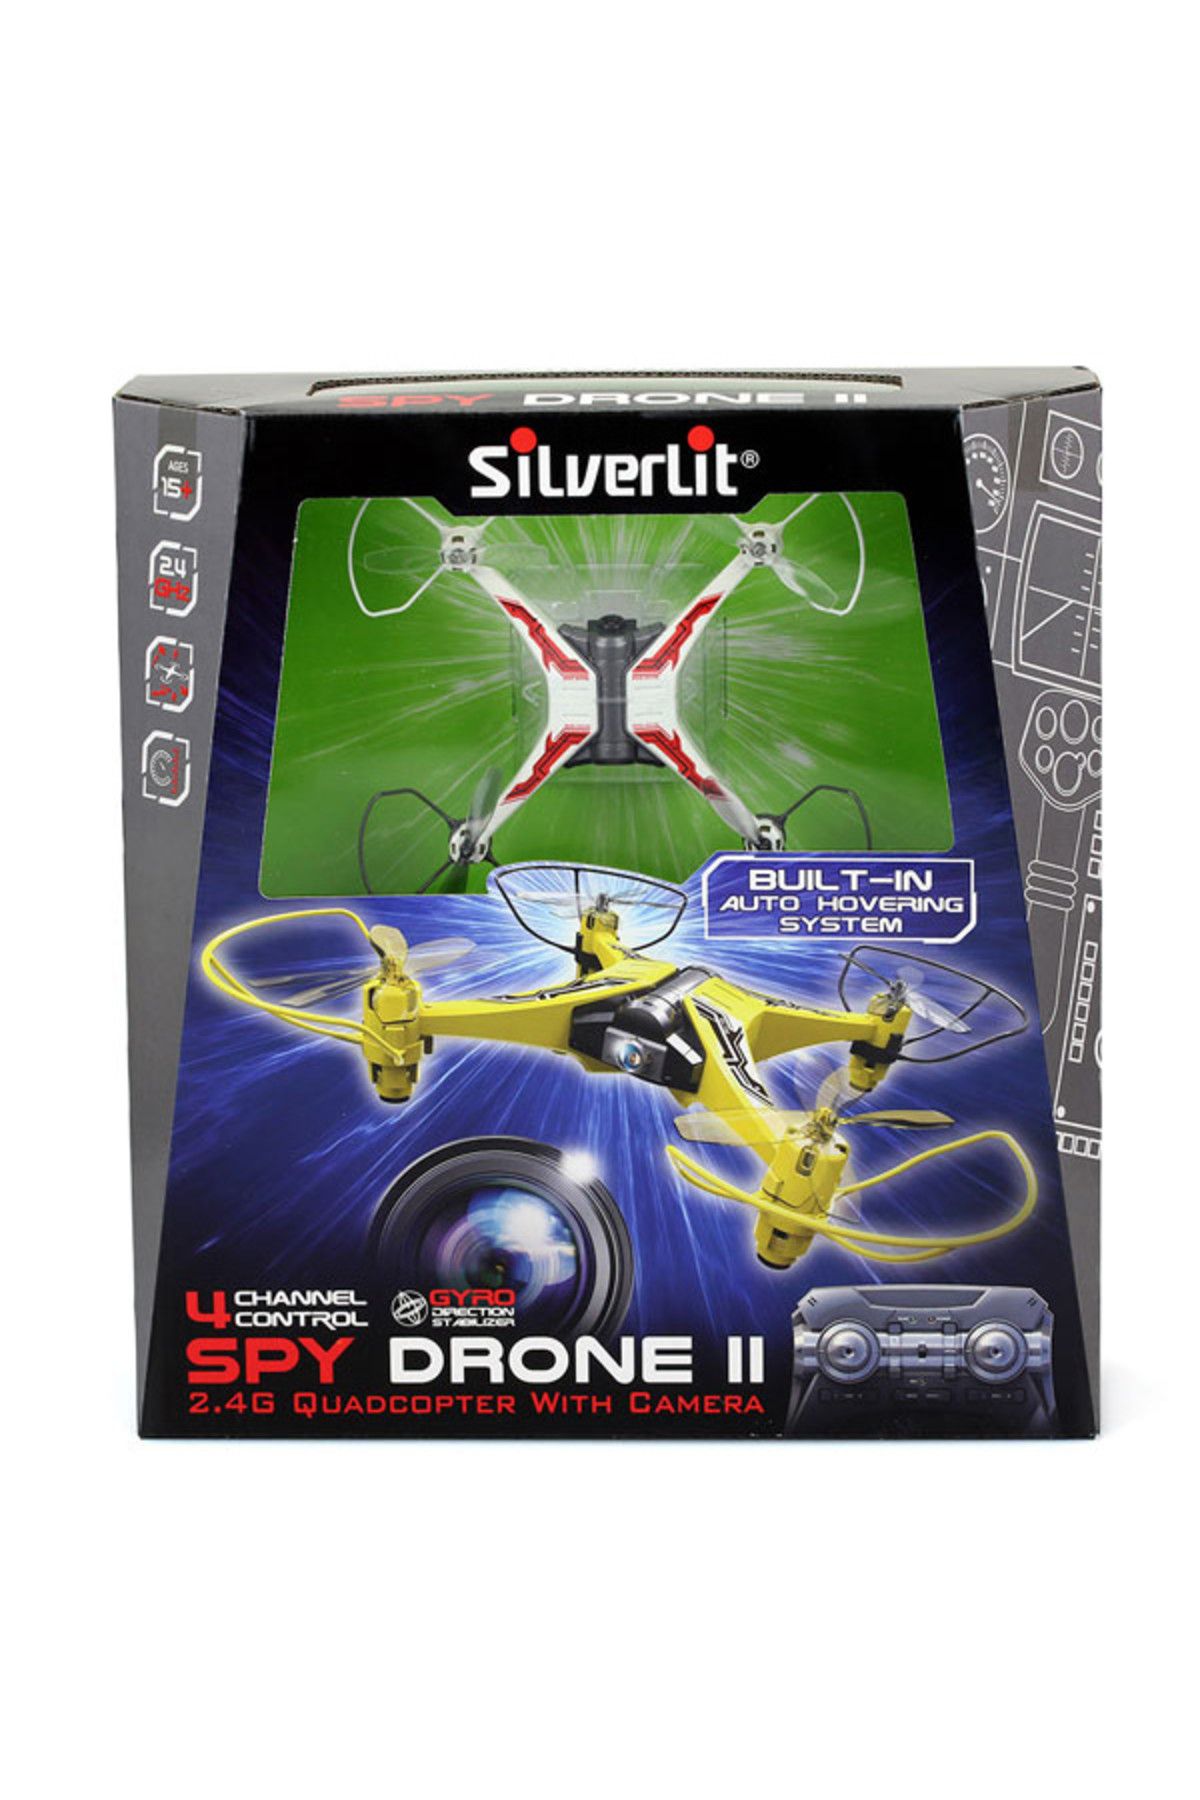 Silverlit Spy Drone II Quadcopter